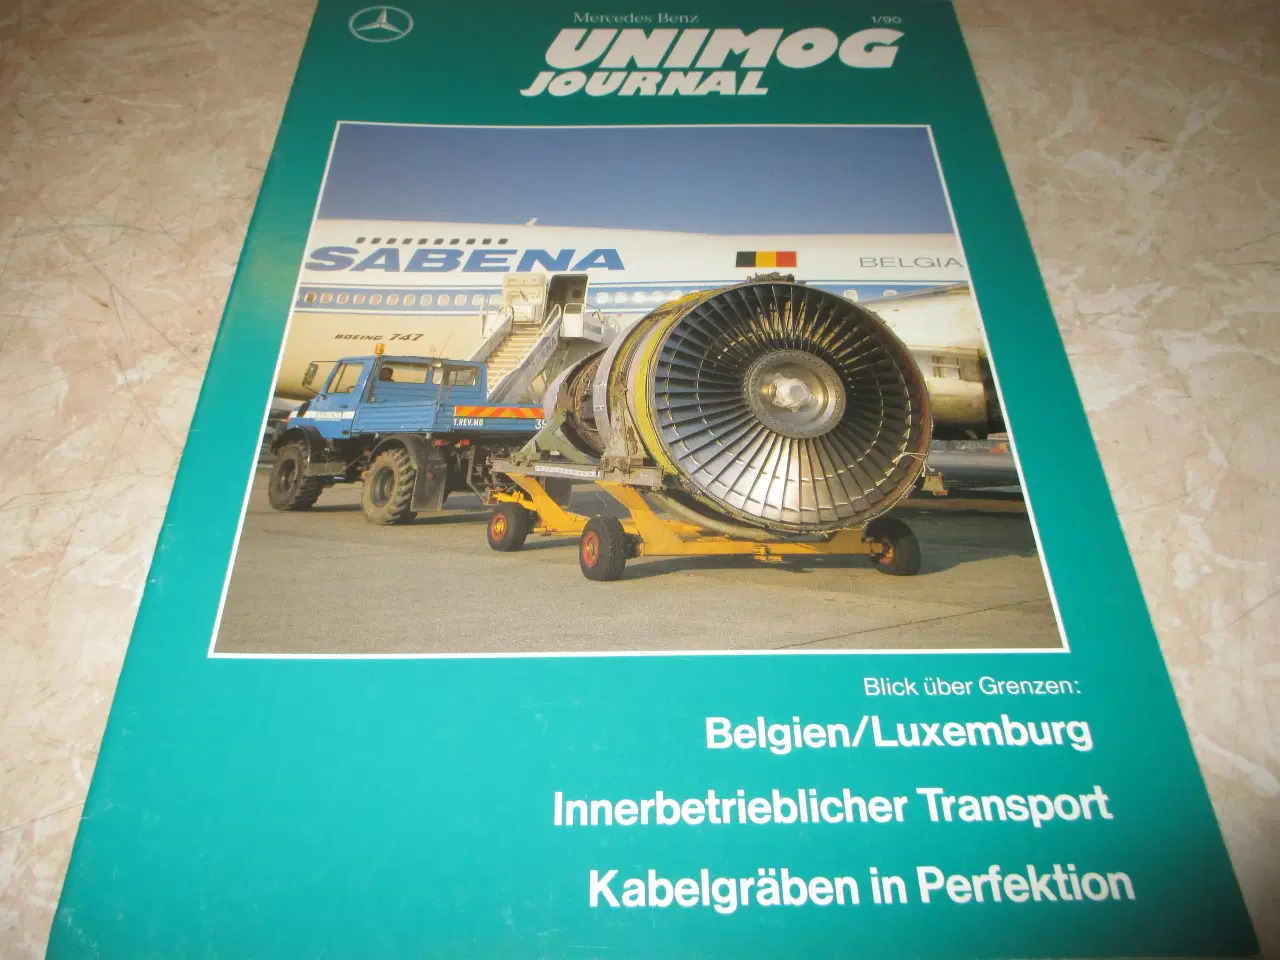 Billede 1 - Mercedes Unimog Journal